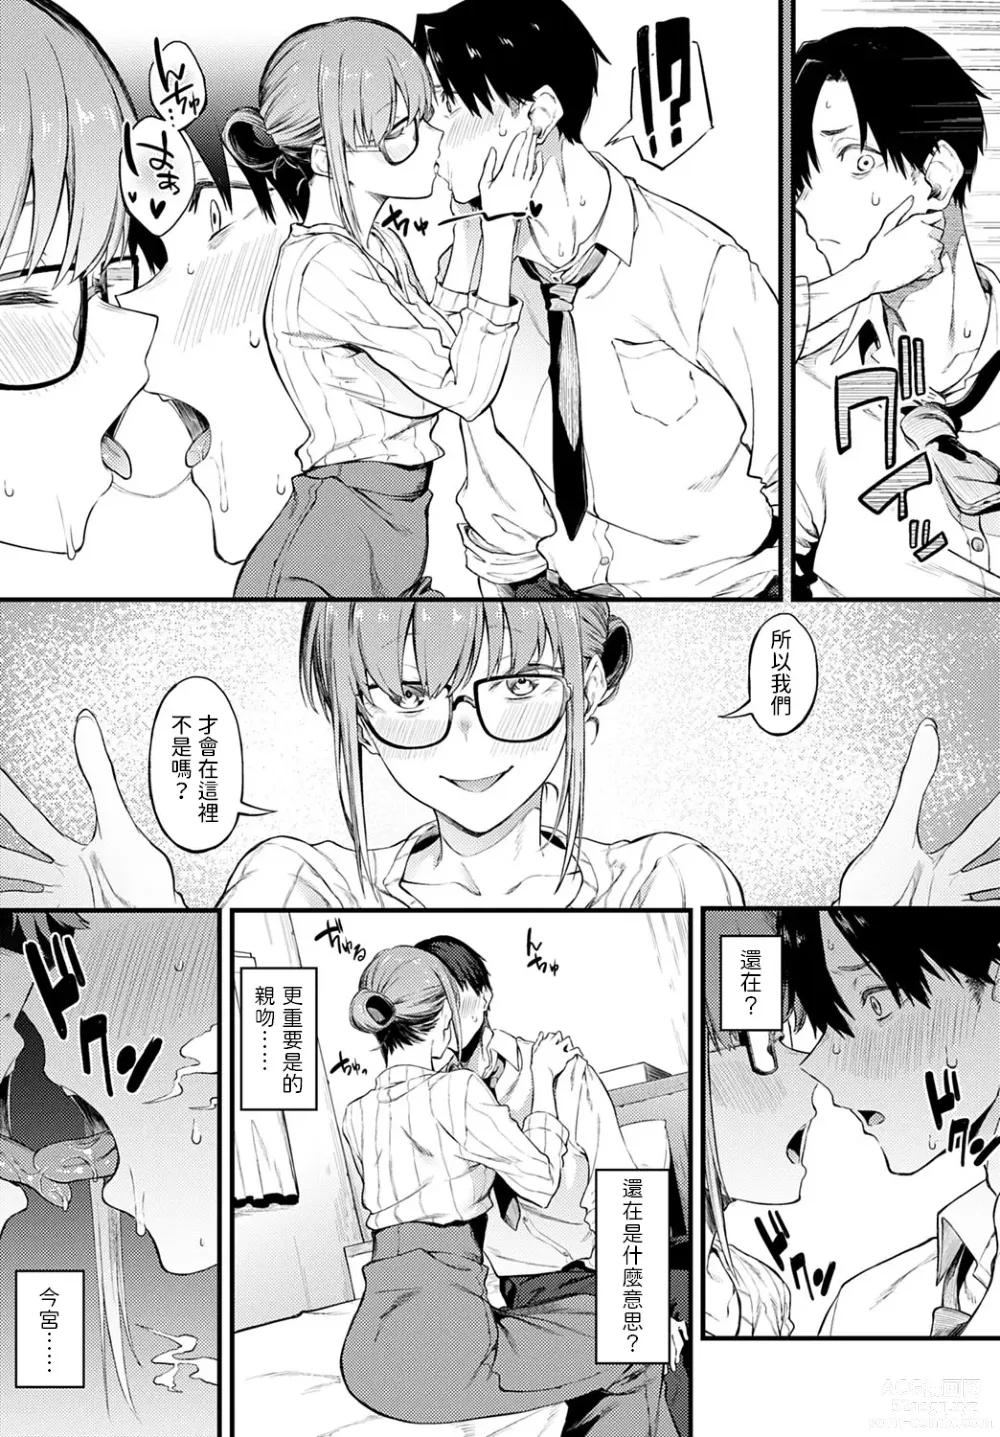 Page 5 of manga Kimi wa Kireida - You are so Beautiful